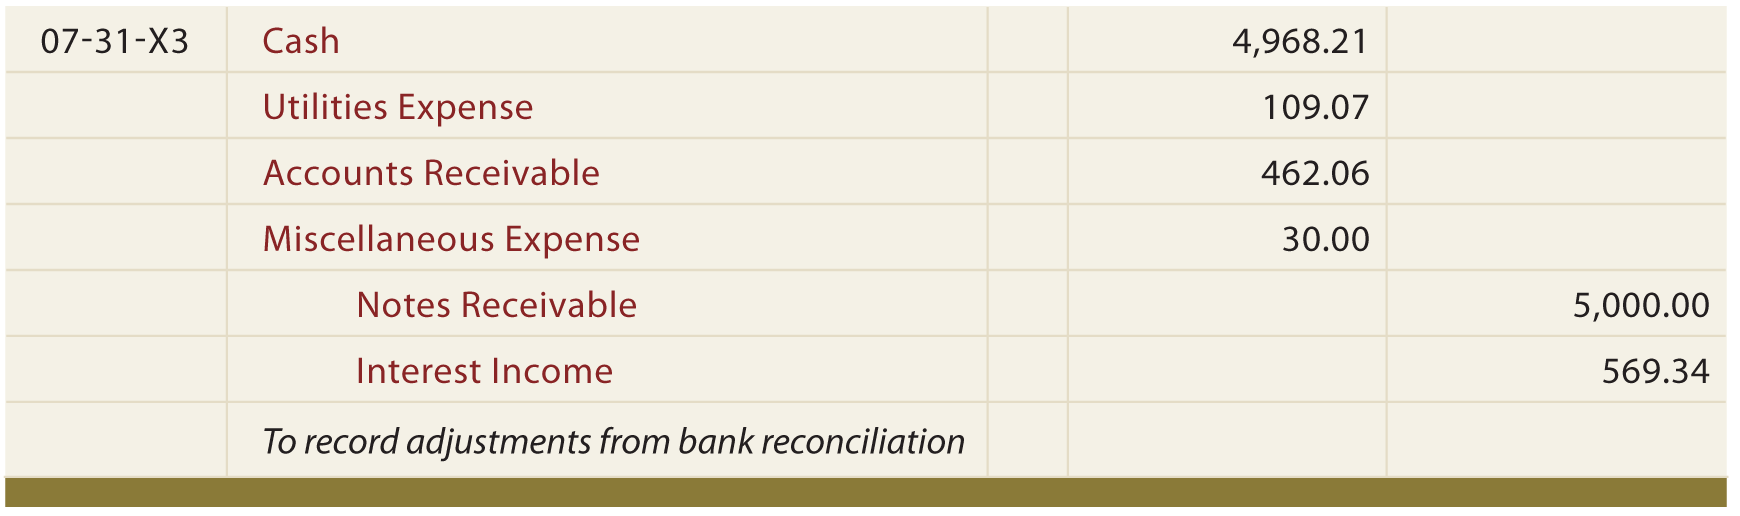 Bank Reconciliation Journal Entries